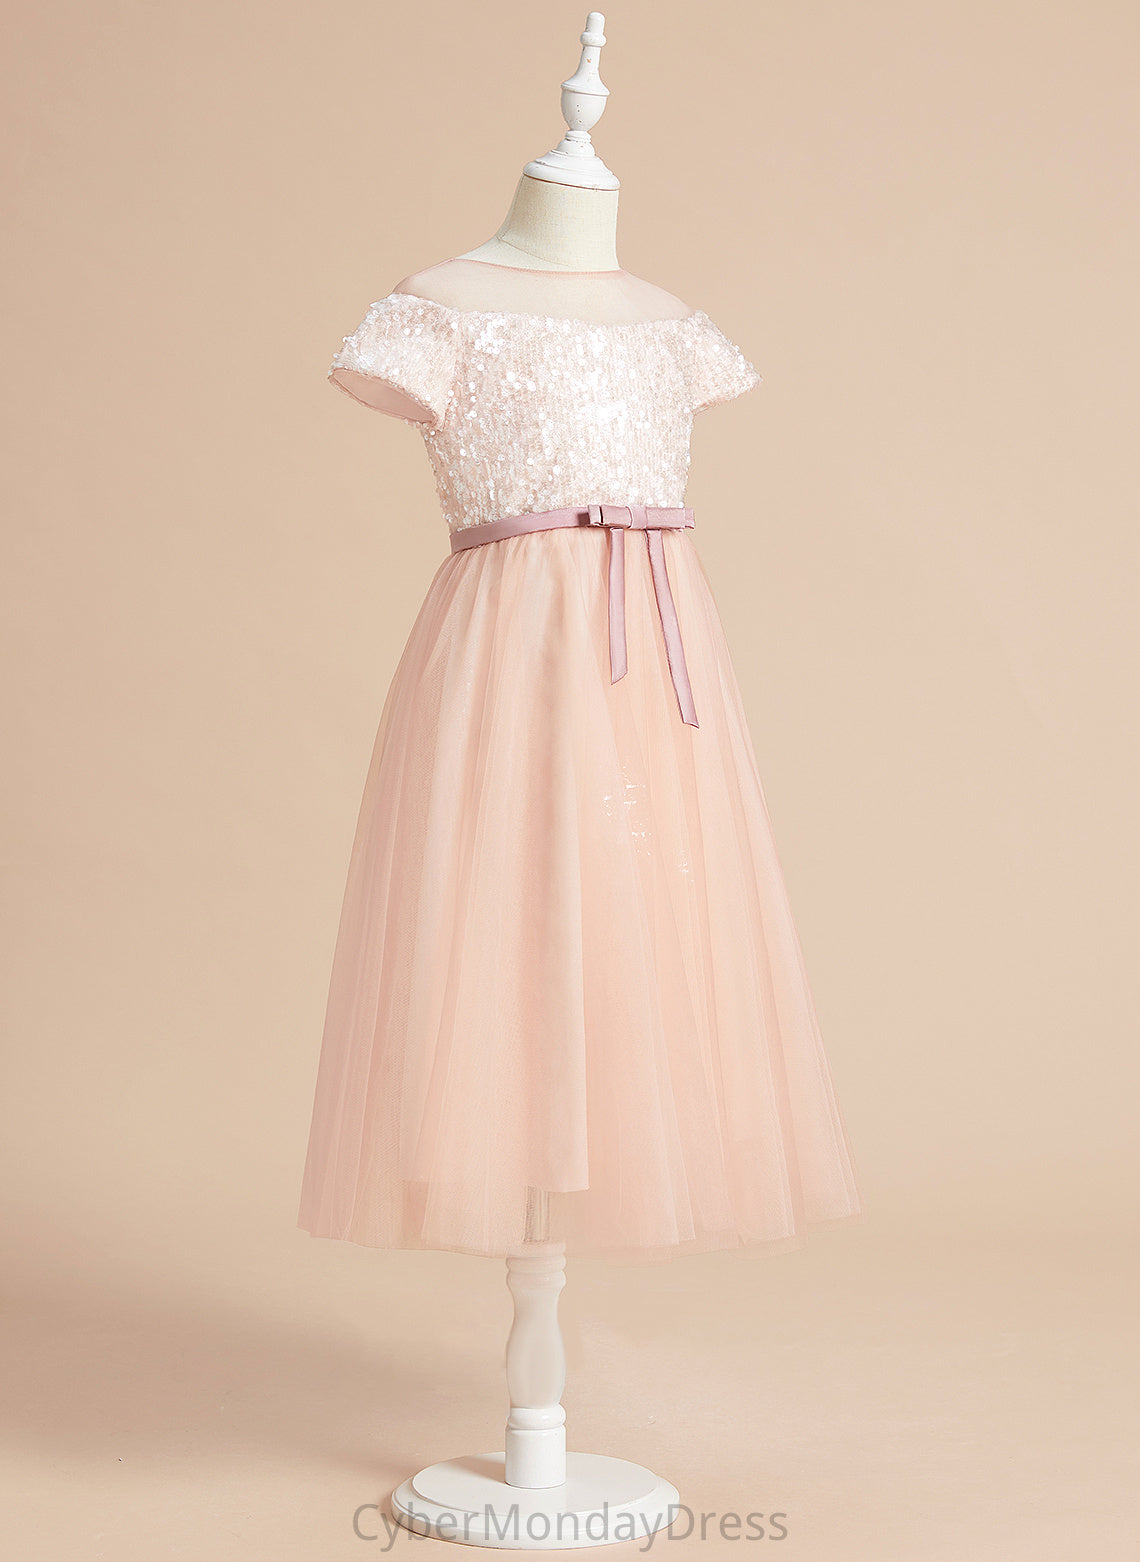 Scoop Sash/Bow(s) Neck - Flower With A-Line Tea-length Dress Sleeves Flower Girl Dresses Tulle Girl Cristina Short